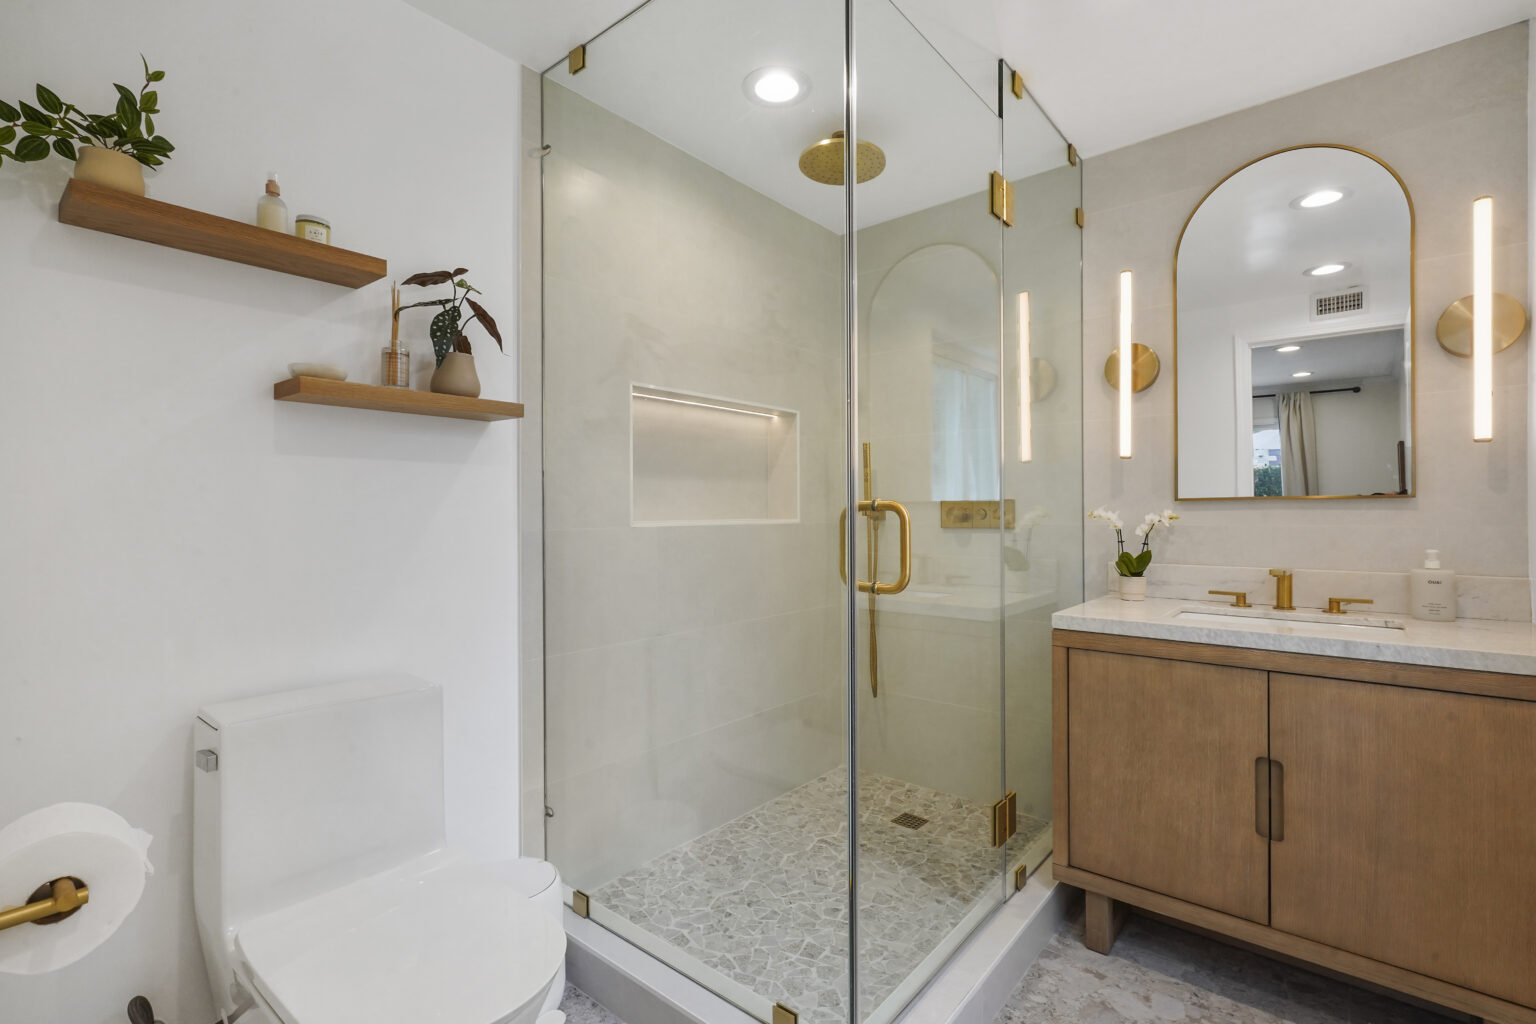 Bathroom remodel in Seal Beach, CA by local general contractor Katz Design & Builders - After